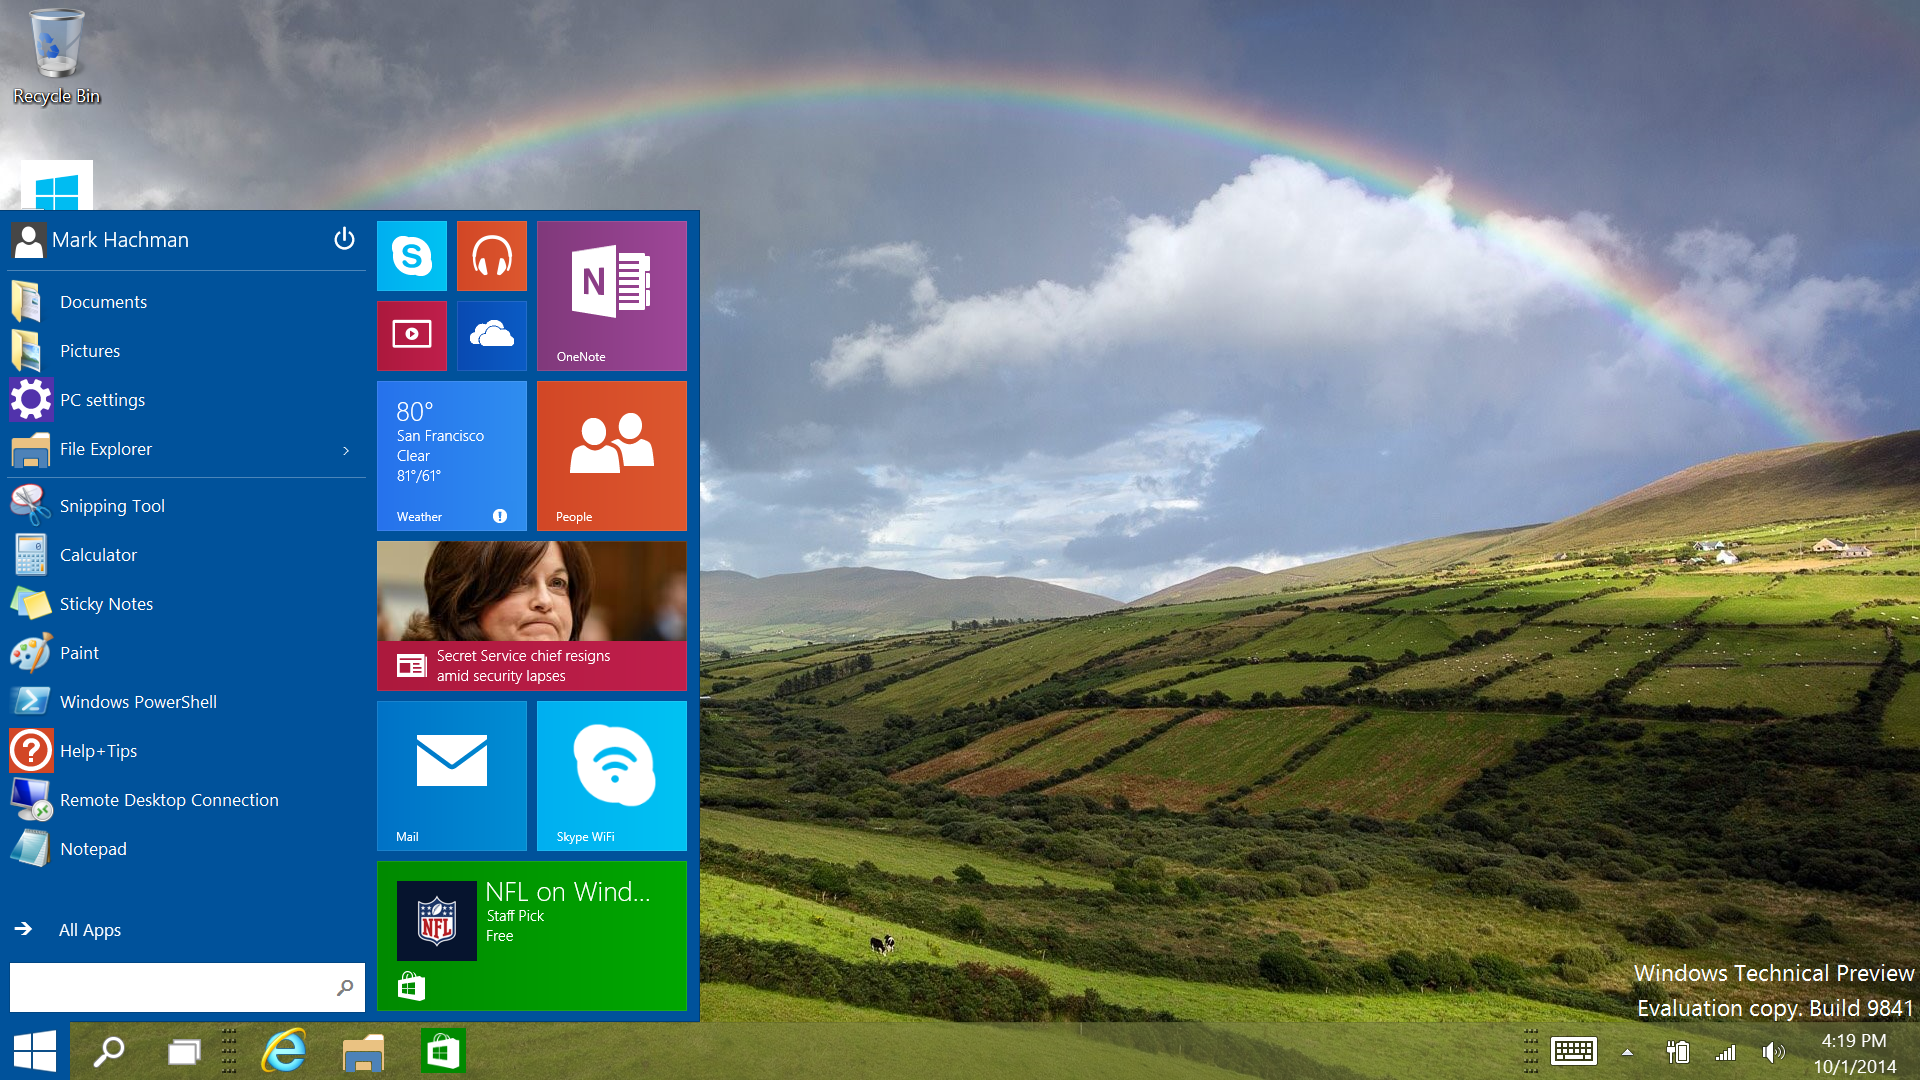 live weather desktop wallpaper for mac